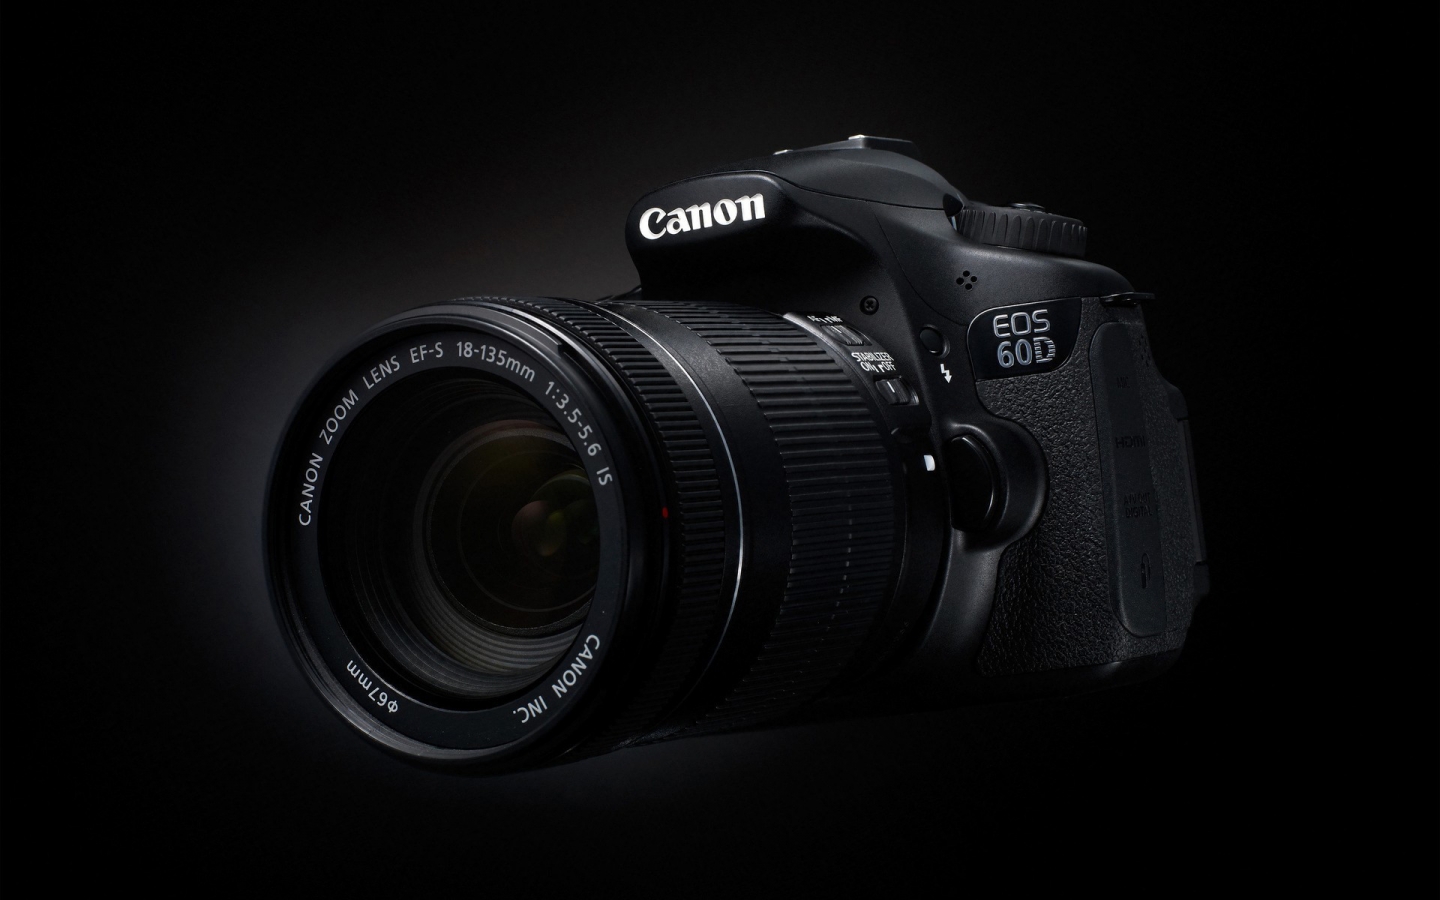 Canon EOS 60D for 1440 x 900 widescreen resolution